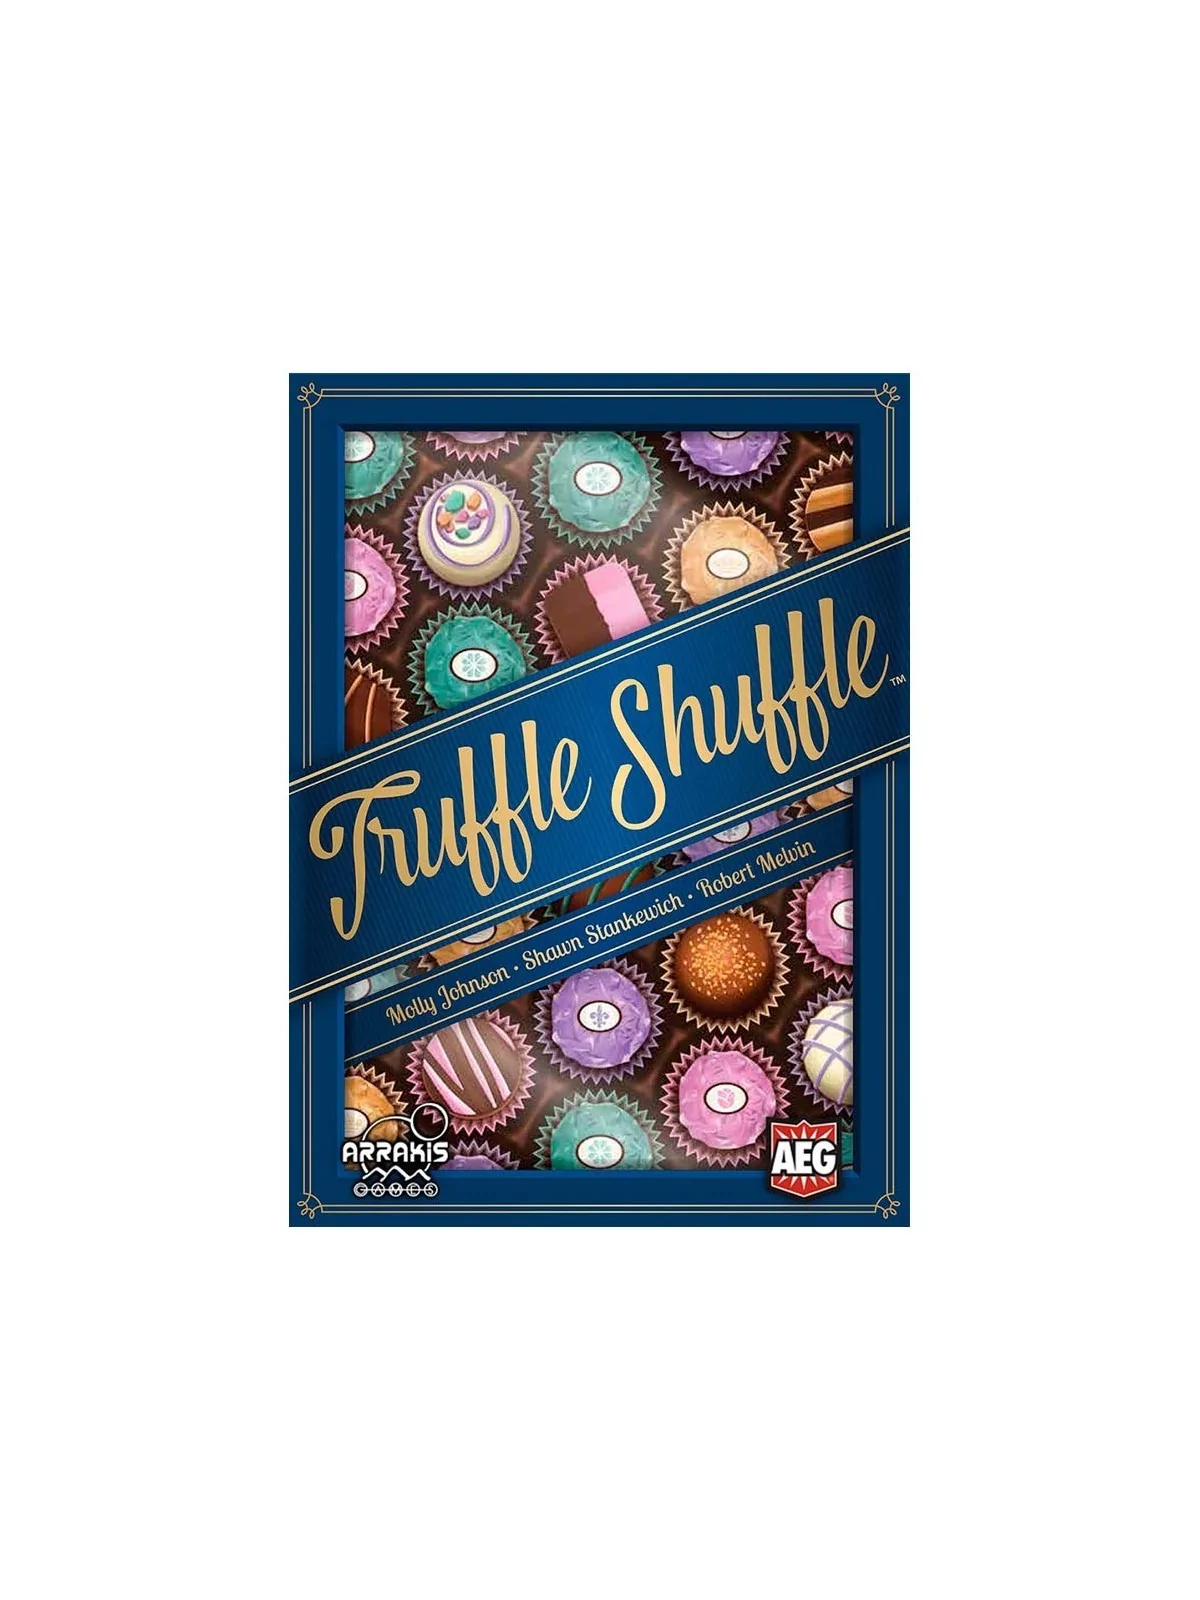 Comprar Truffle Shuffle barato al mejor precio 17,96 € de Arrakis Game